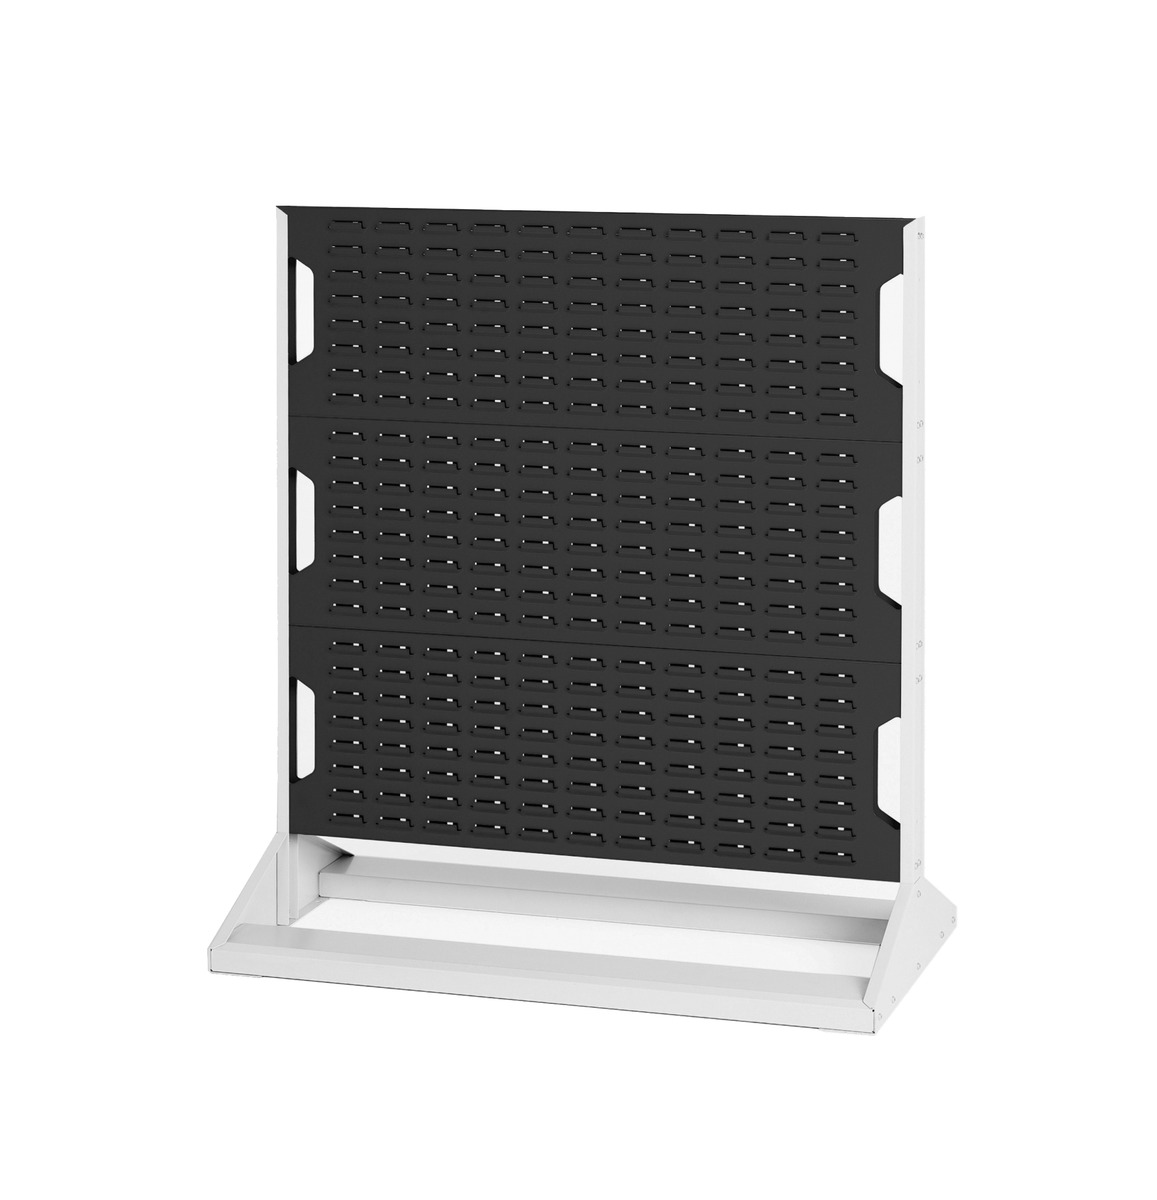 16917125. - Louvre panel rack single sided